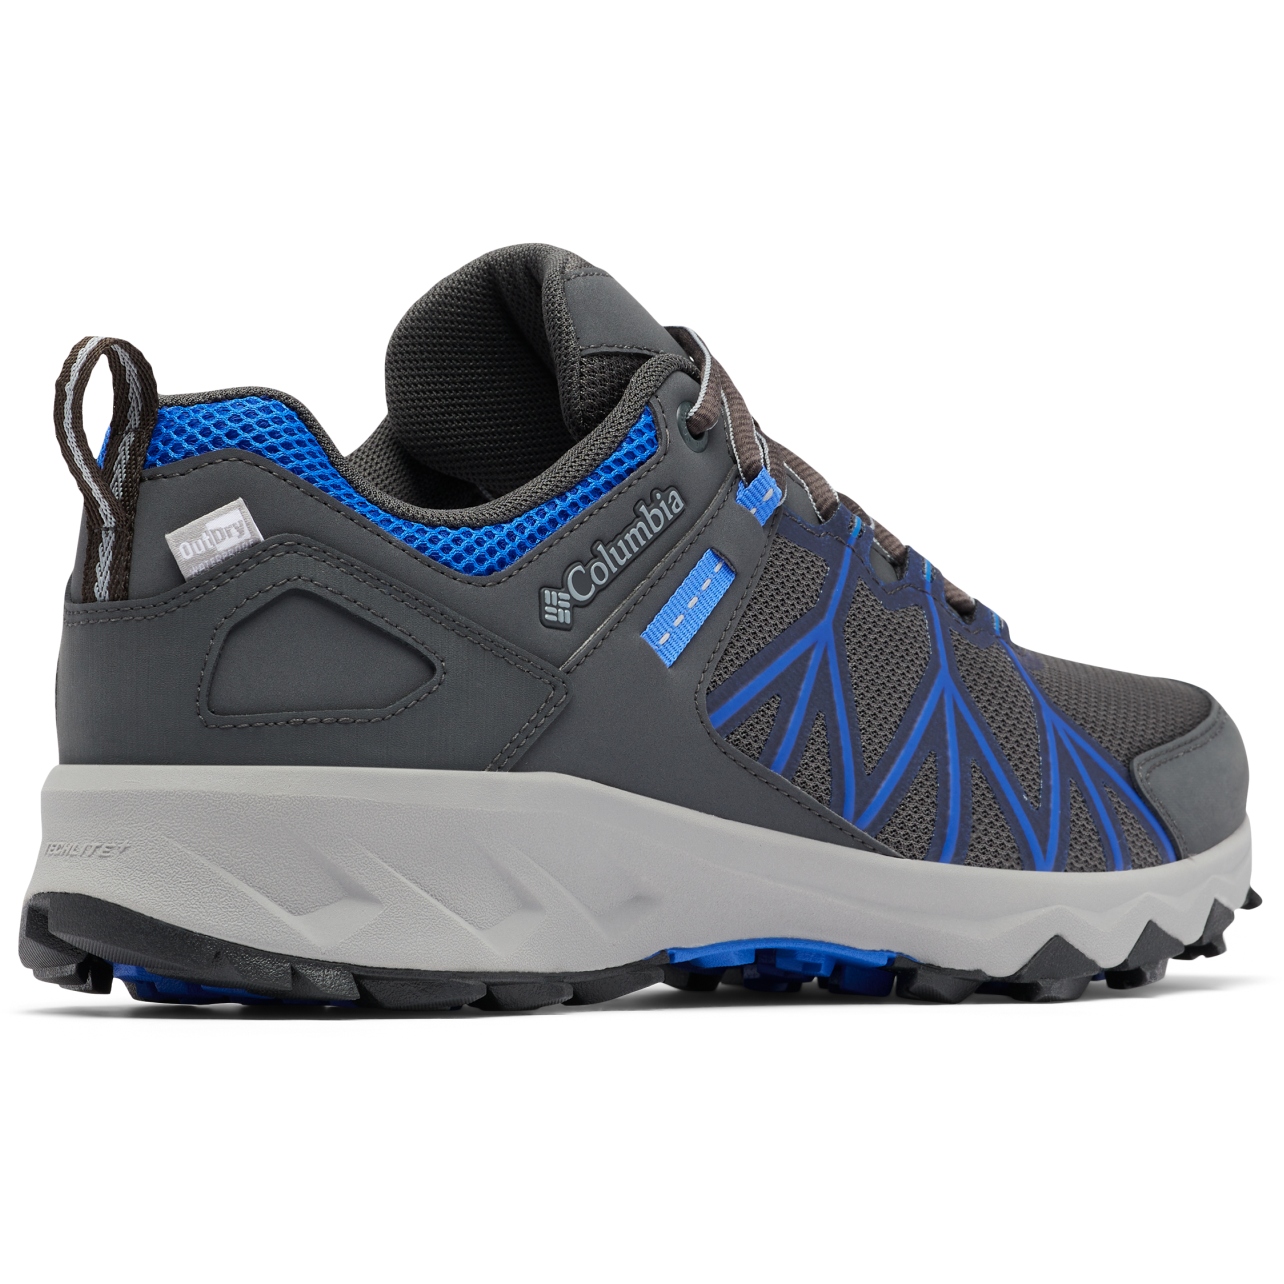 Columbia Peakfreak II Outdry Gray Hiking Shoes